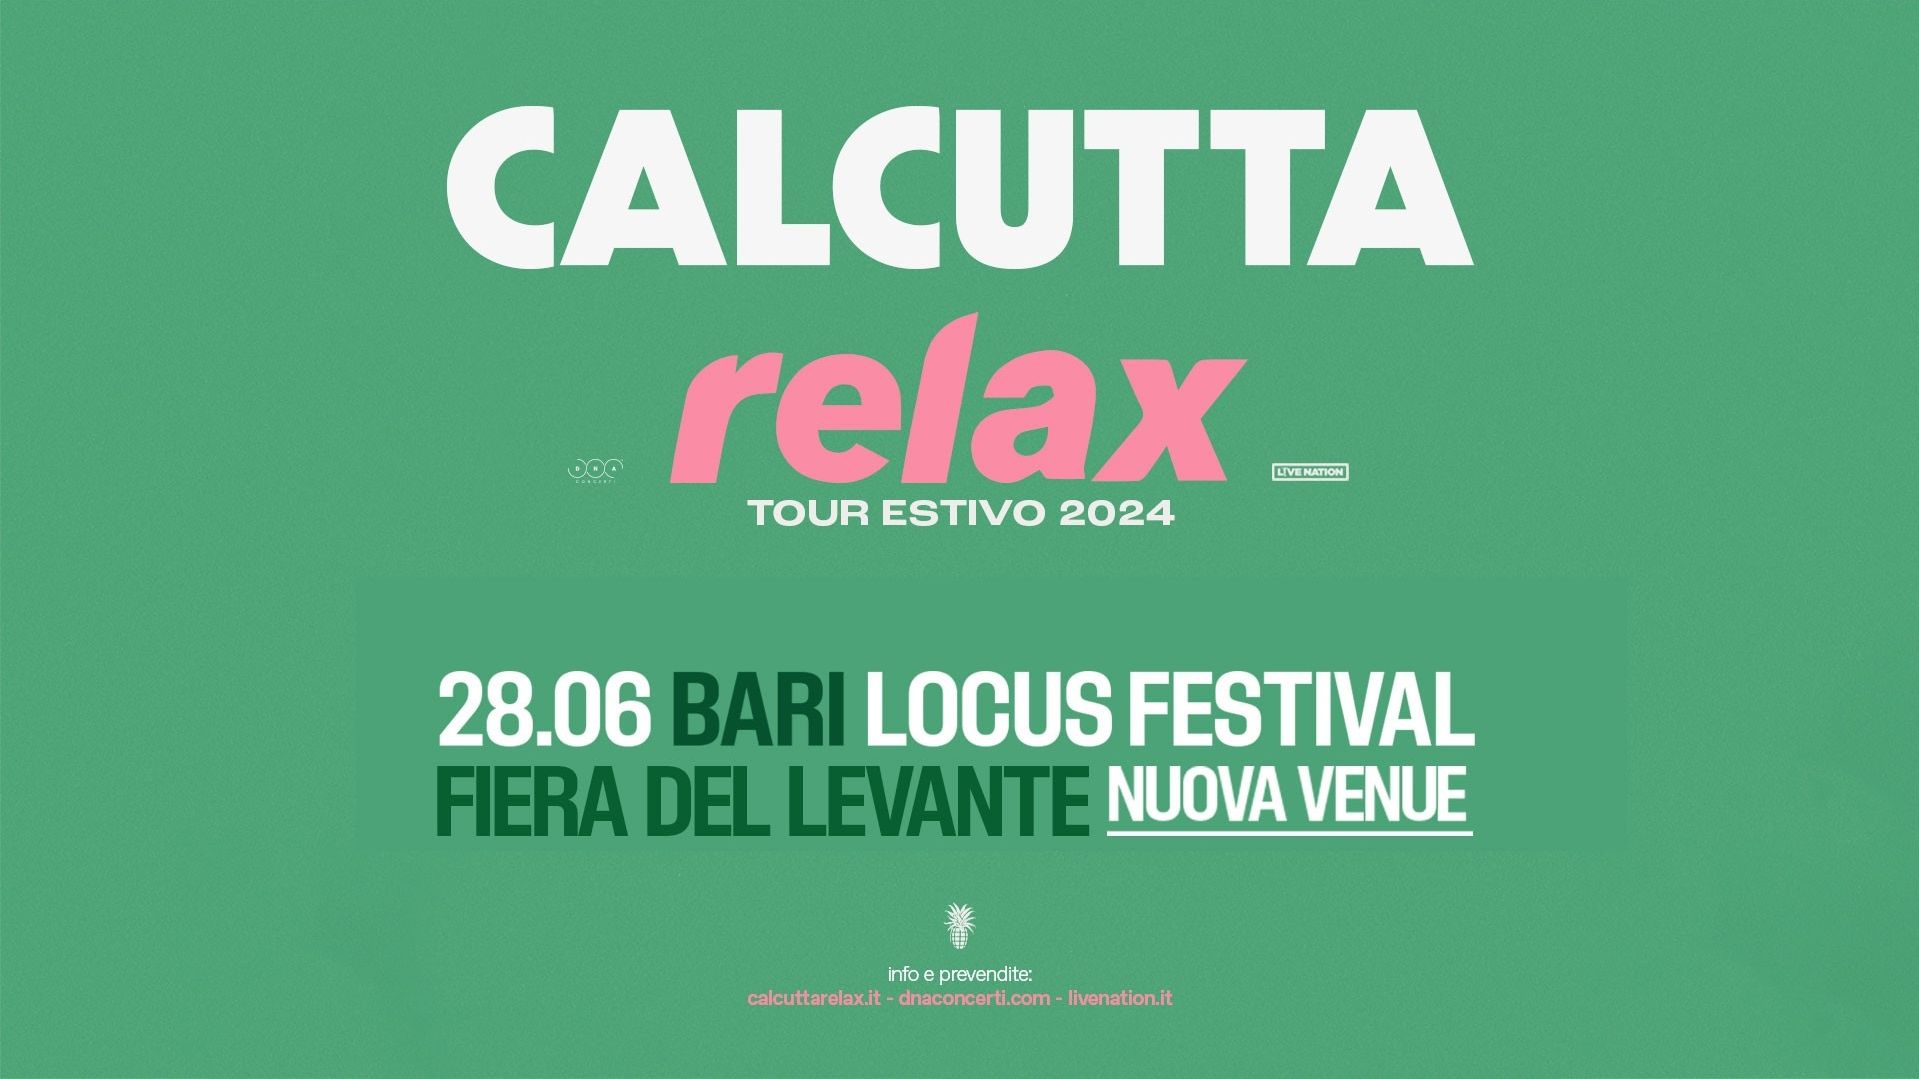 Calcutta "relax tour"